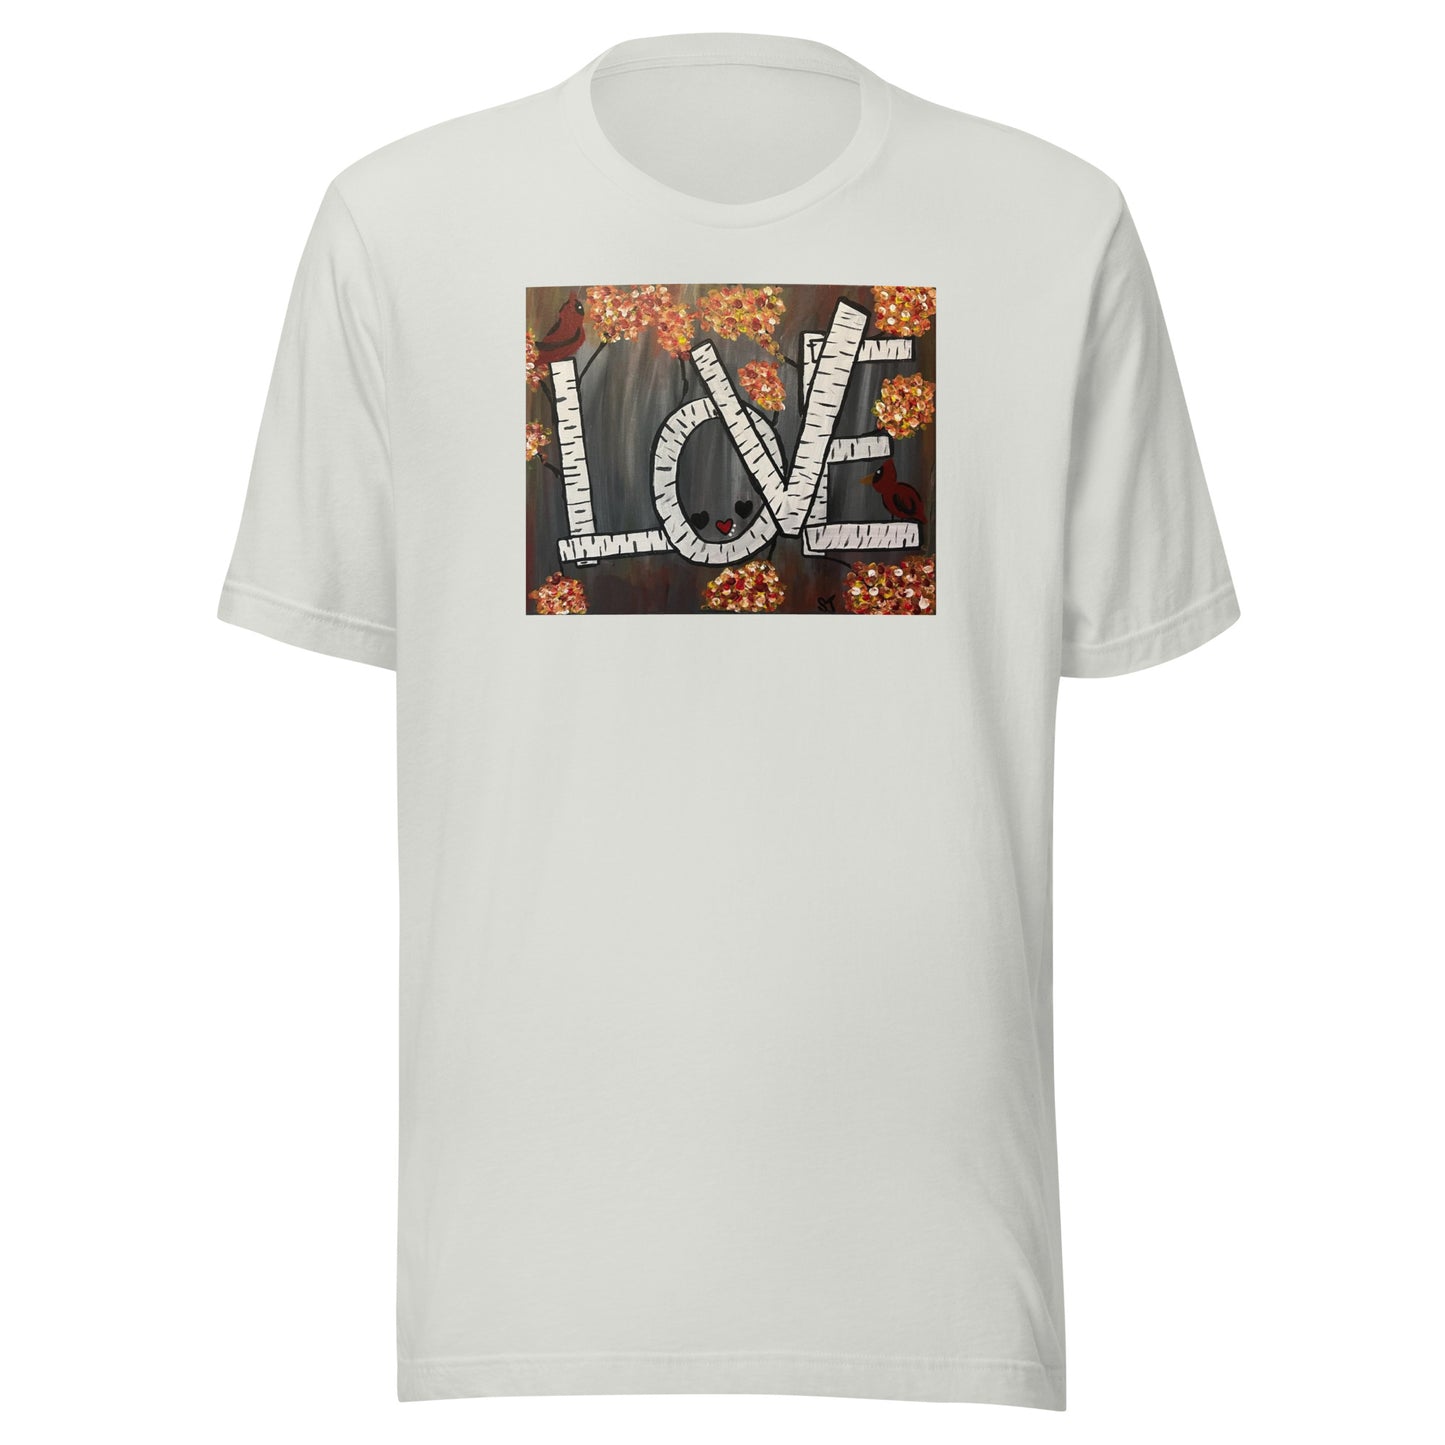 LOVE Unisex t-shirt